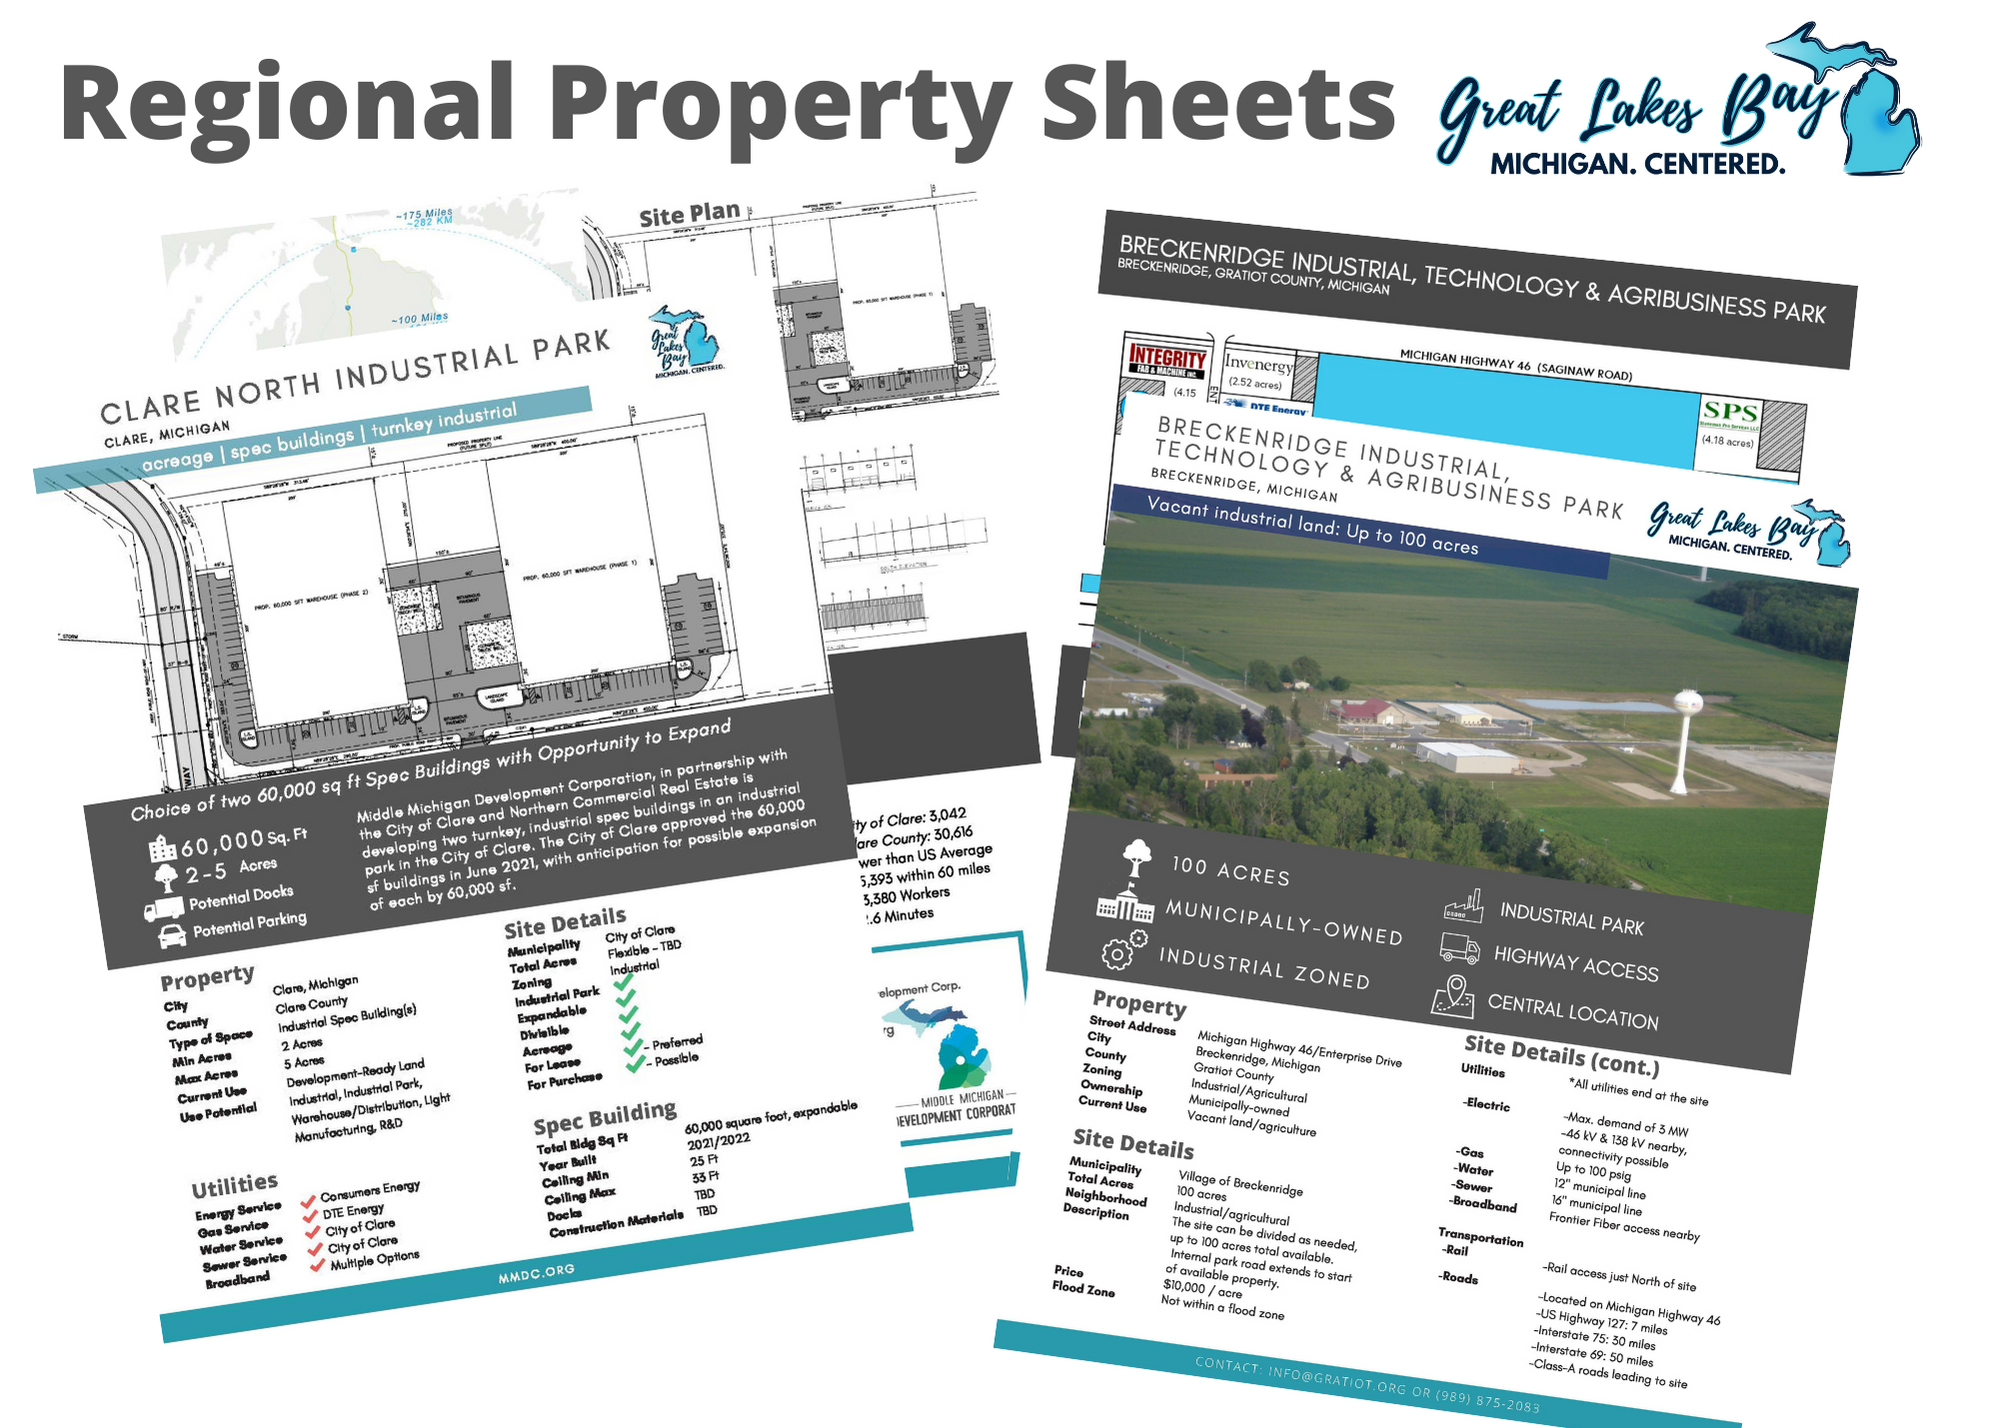 Regional Property Sheets